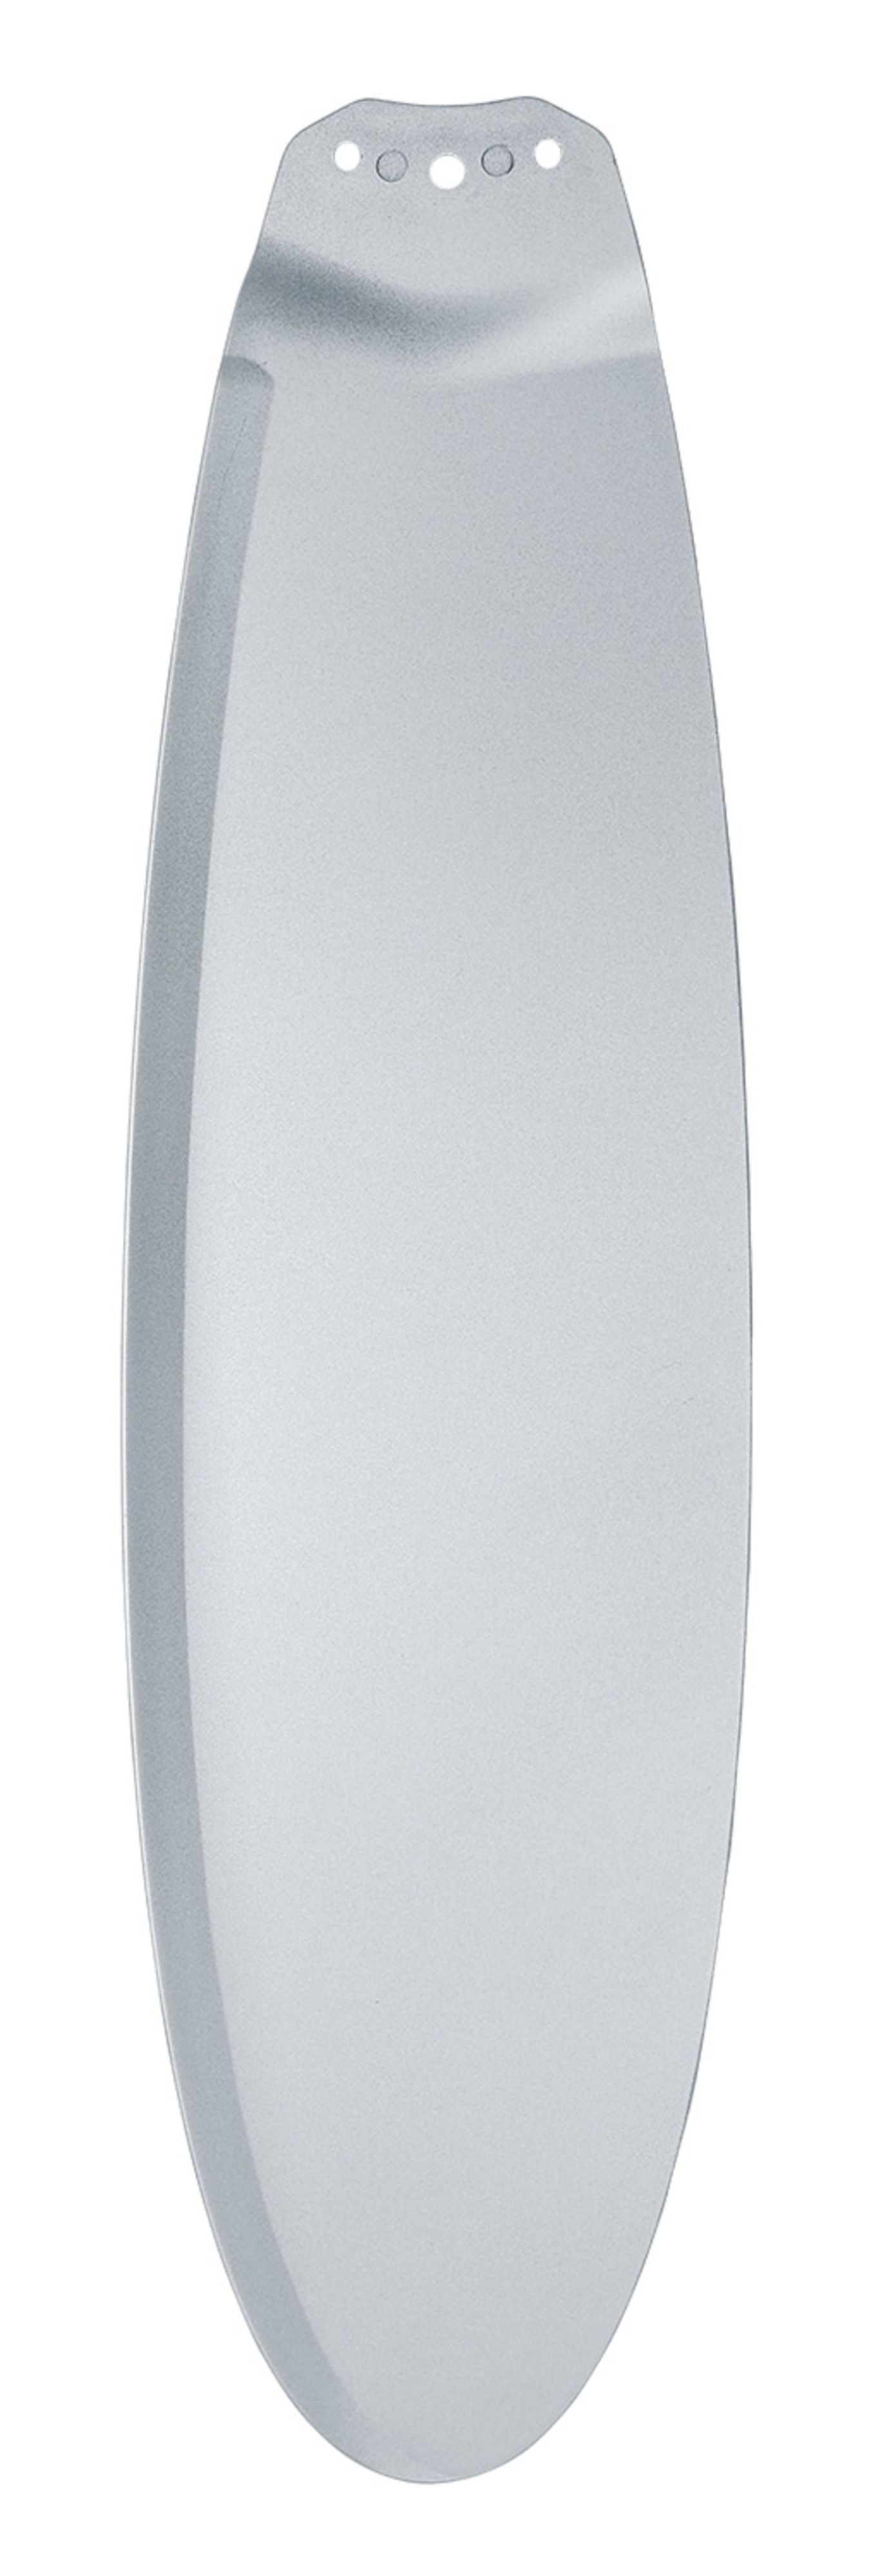 CASAFAN Eco Plano II LED Silber Grau (28 Watt) / Deckenventilator